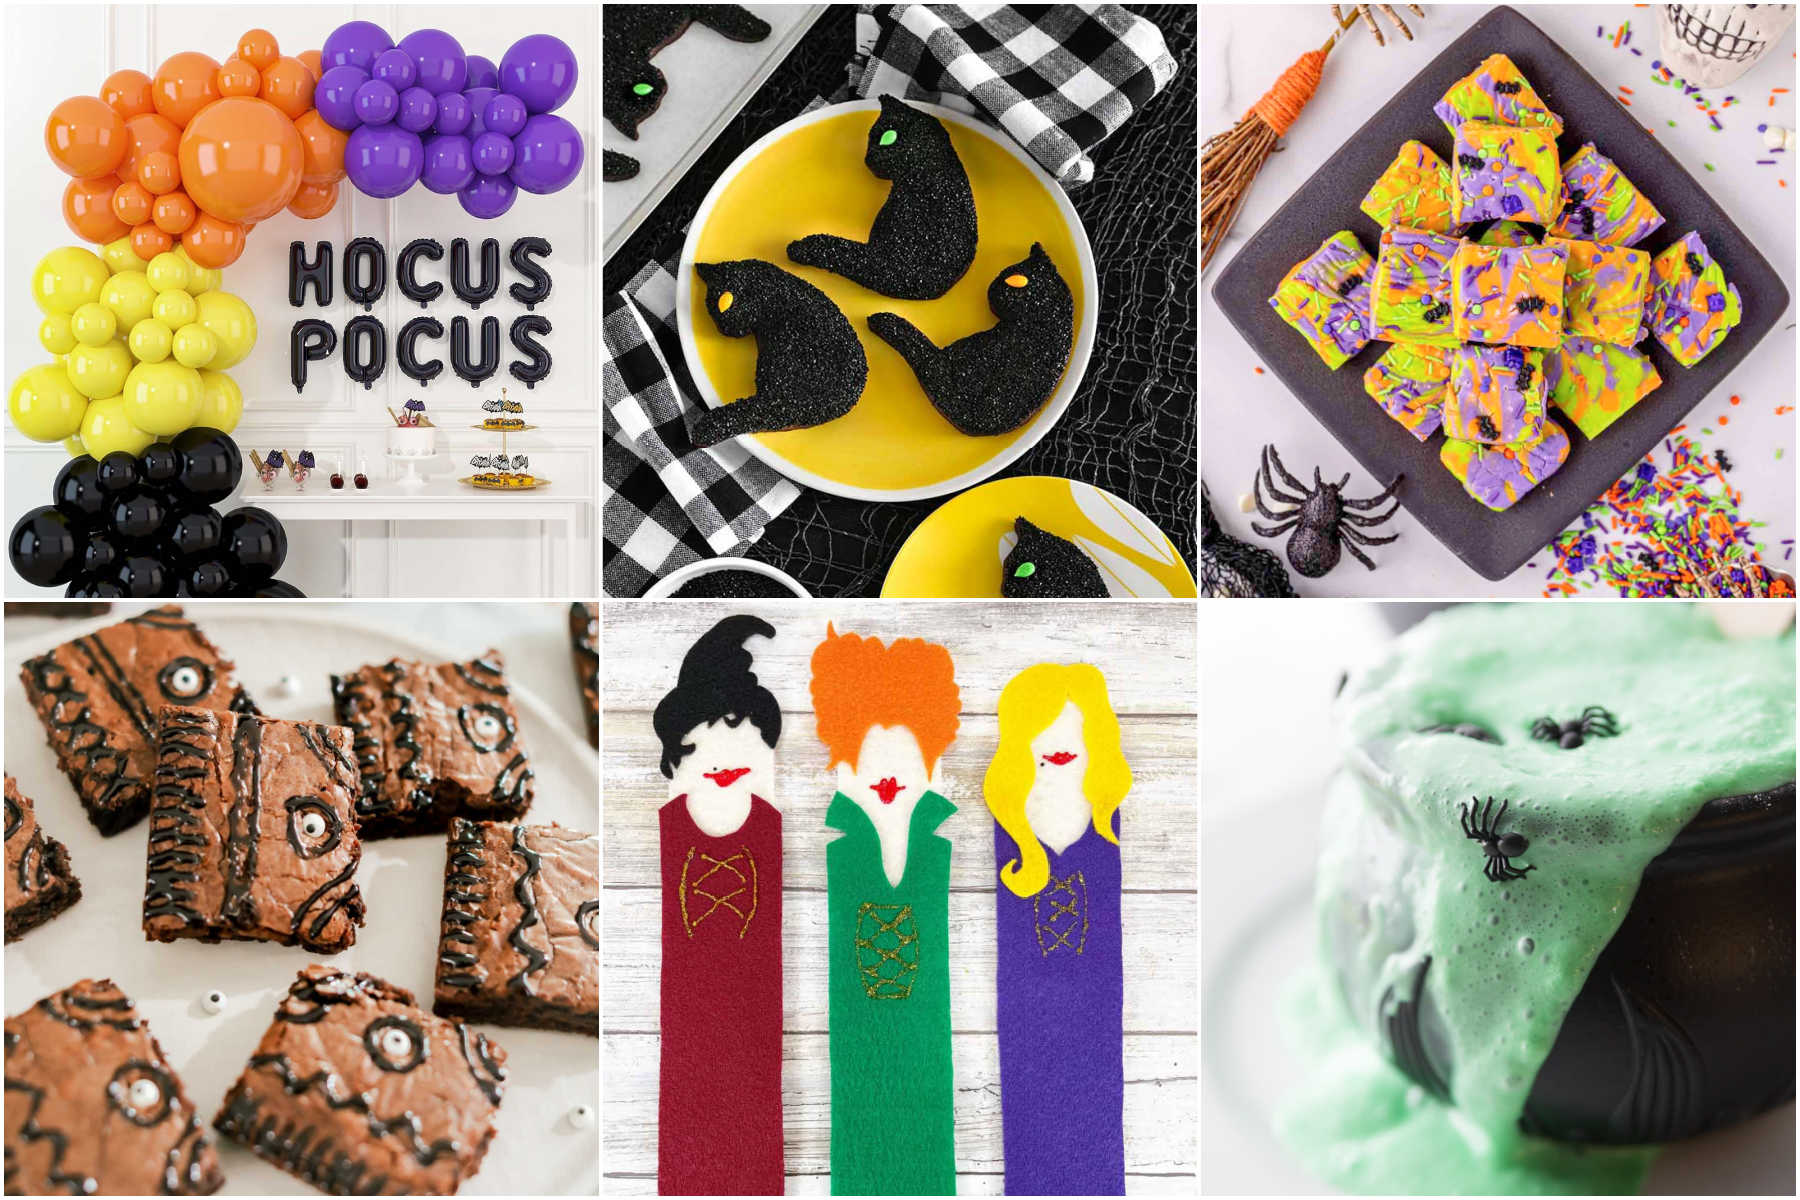 15 Hocus Pocus Decor Ideas to Recreate for Halloween